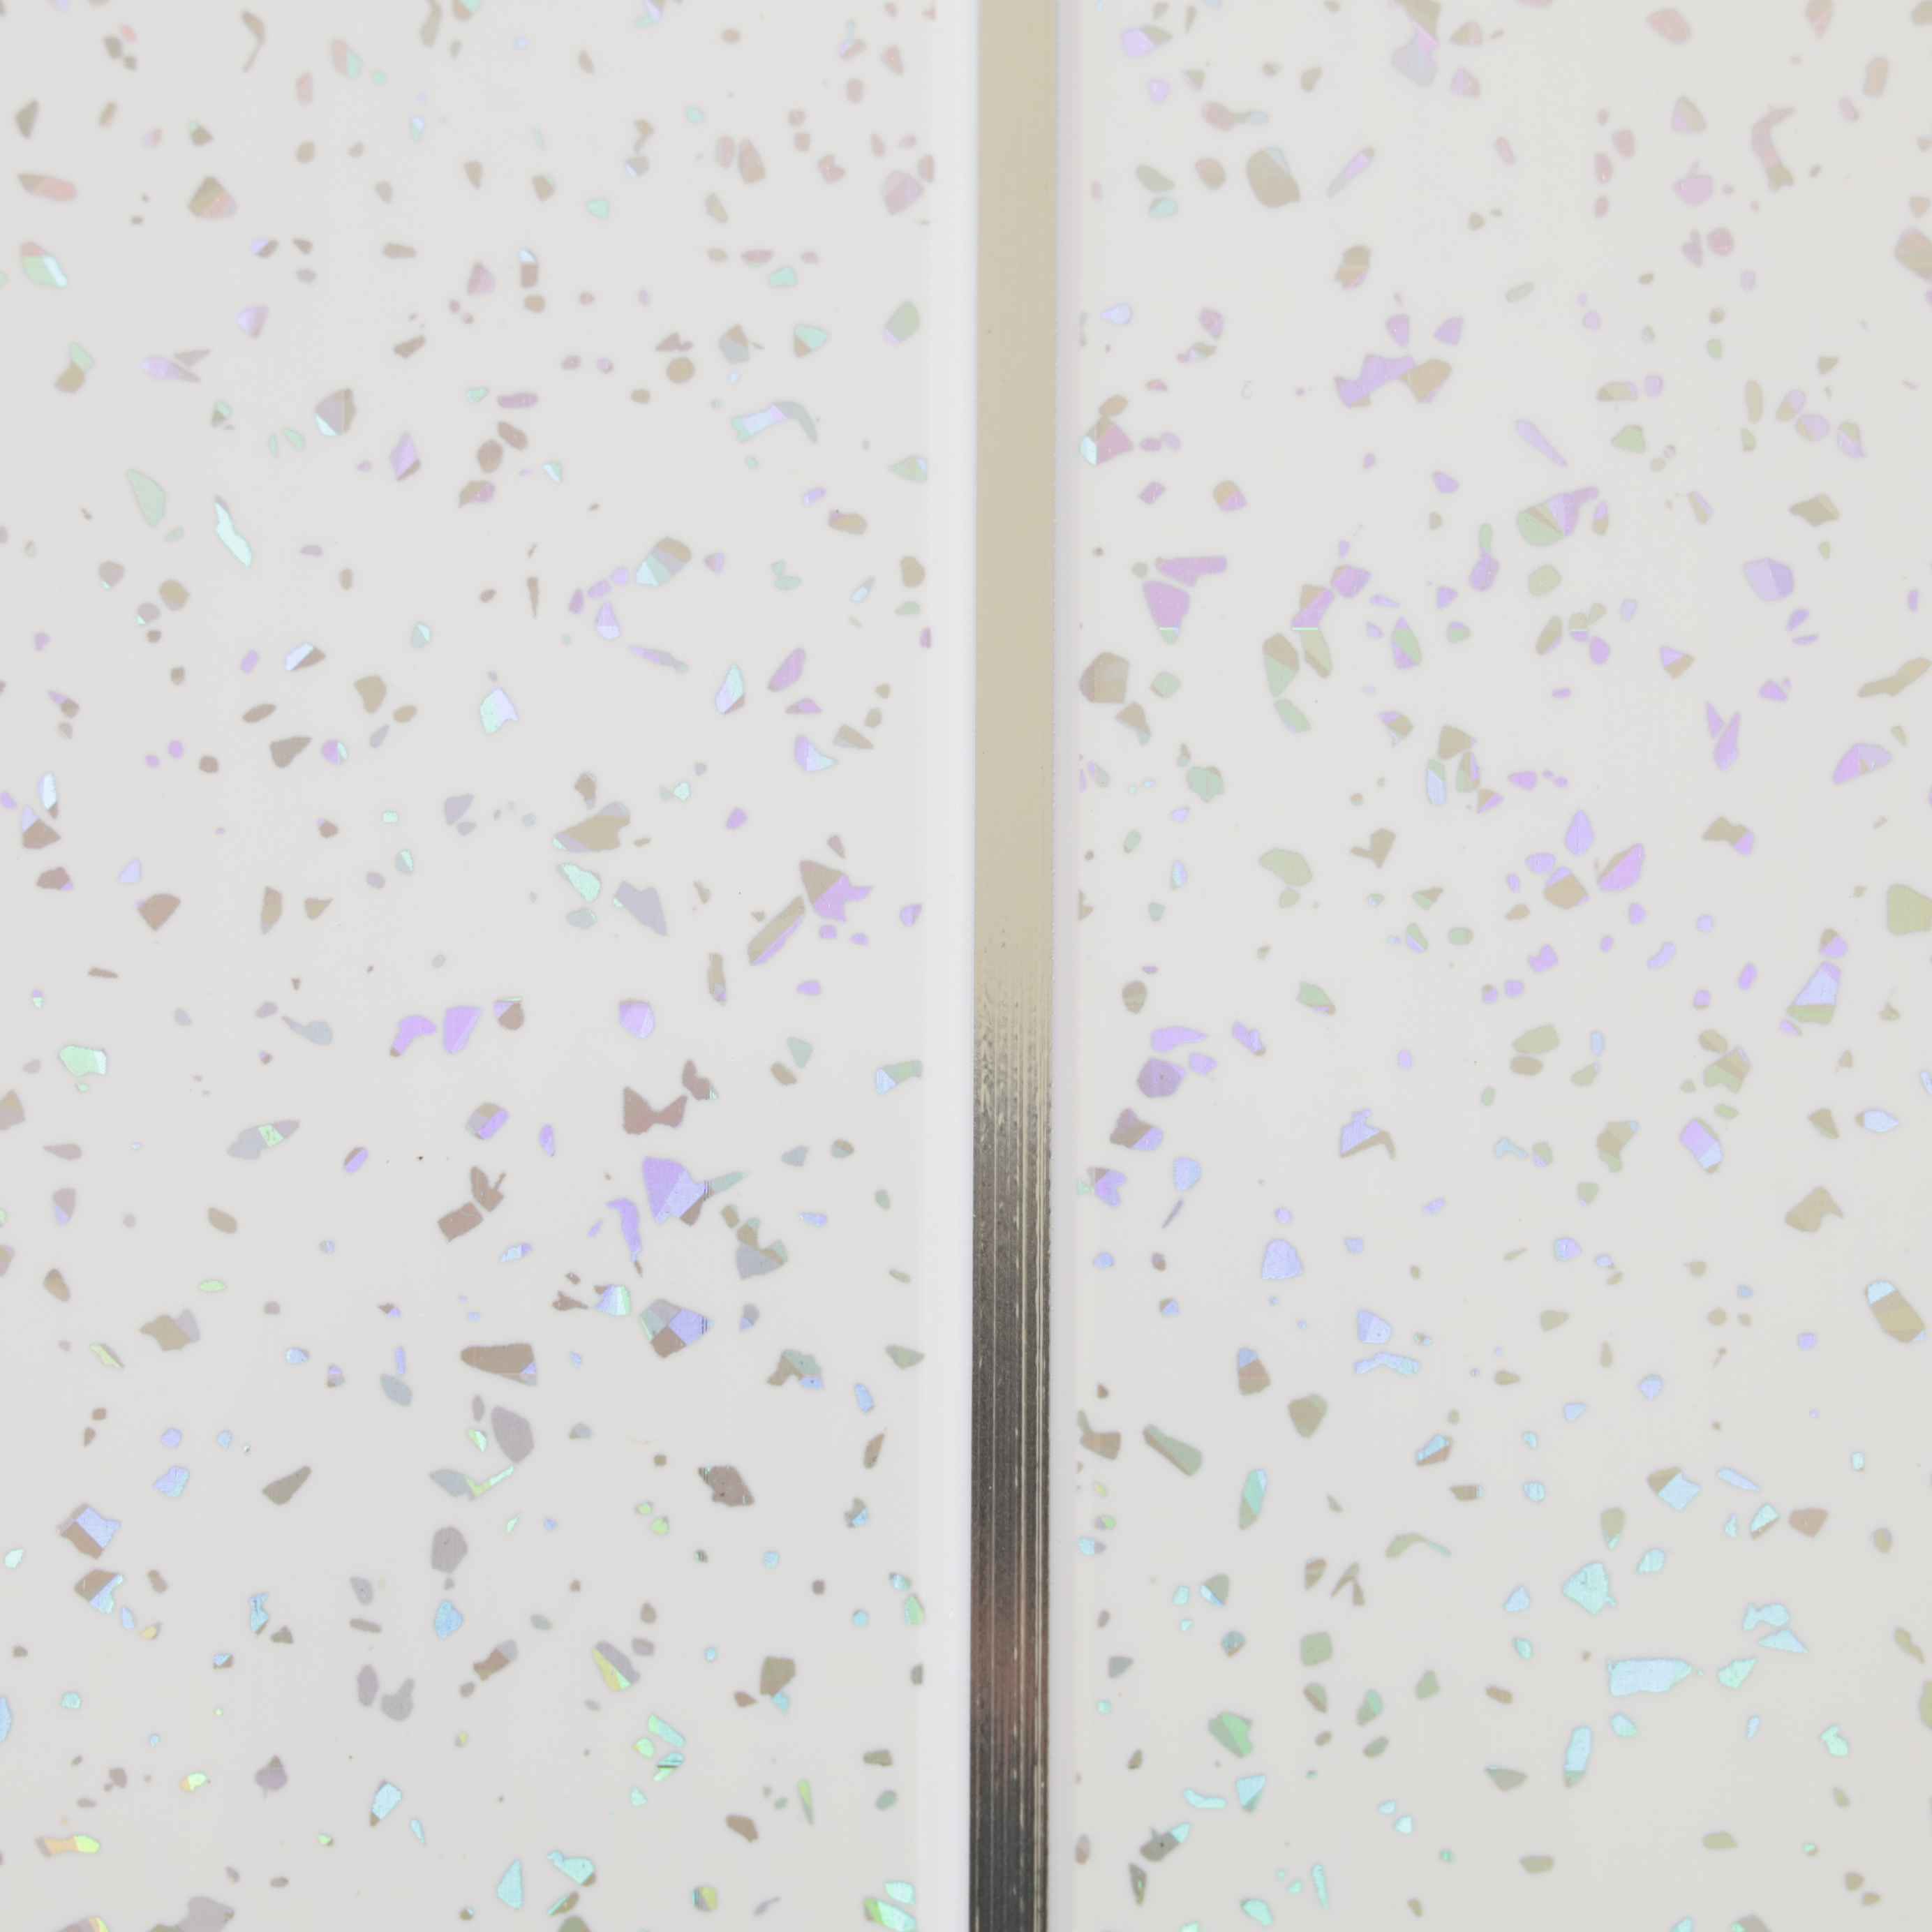 White Sparkle & Chrome 5mm Bathroom Cladding Ceiling Panels